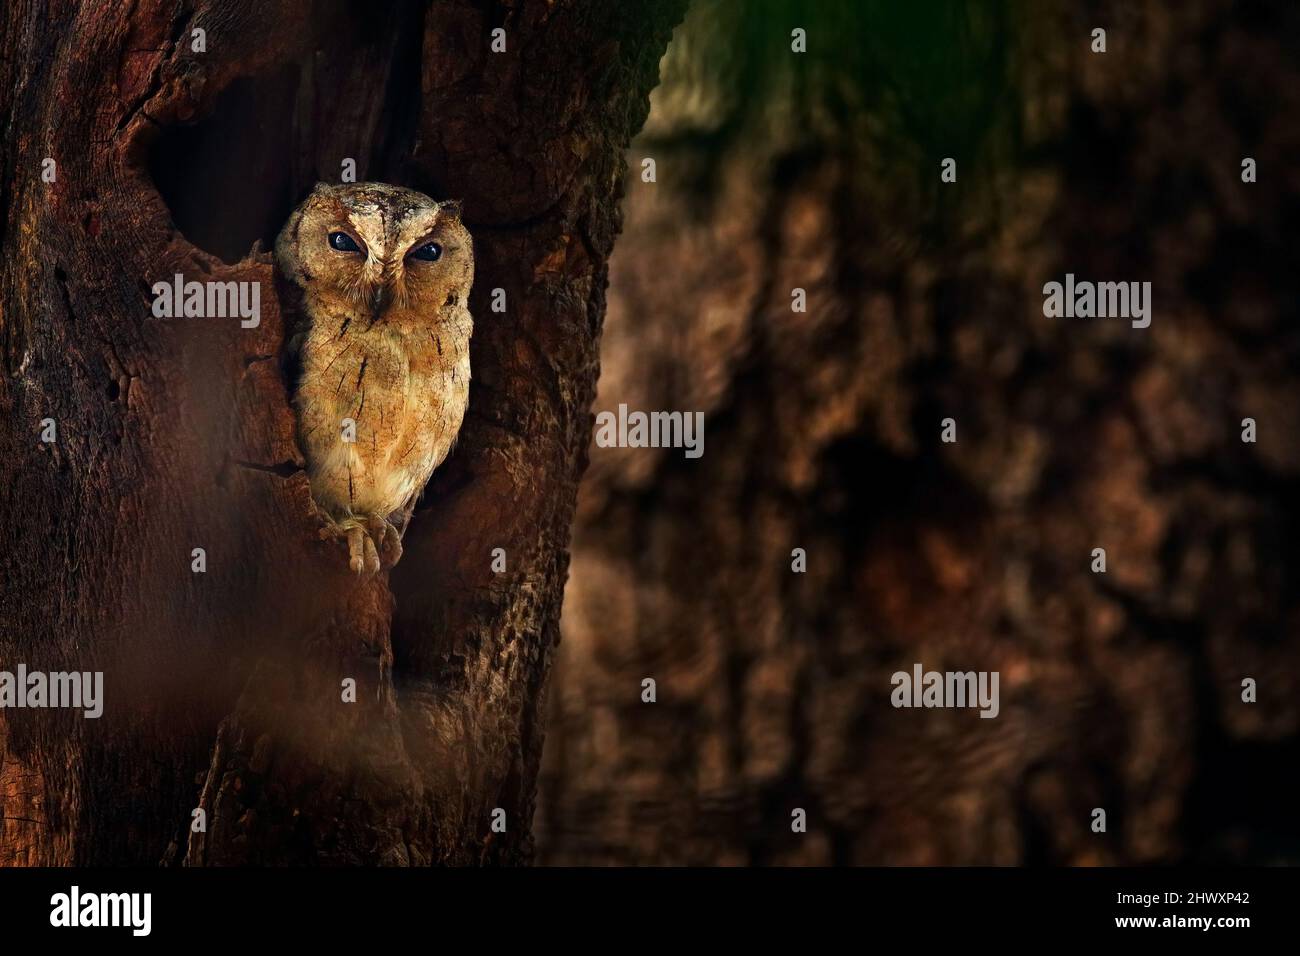 Indian scops owl, Otus bakkamoena, rare bird from Asia. Malaysia beautiful owl in the nature forest habitat. Fish owl sitting on tree in the dark gree Stock Photo